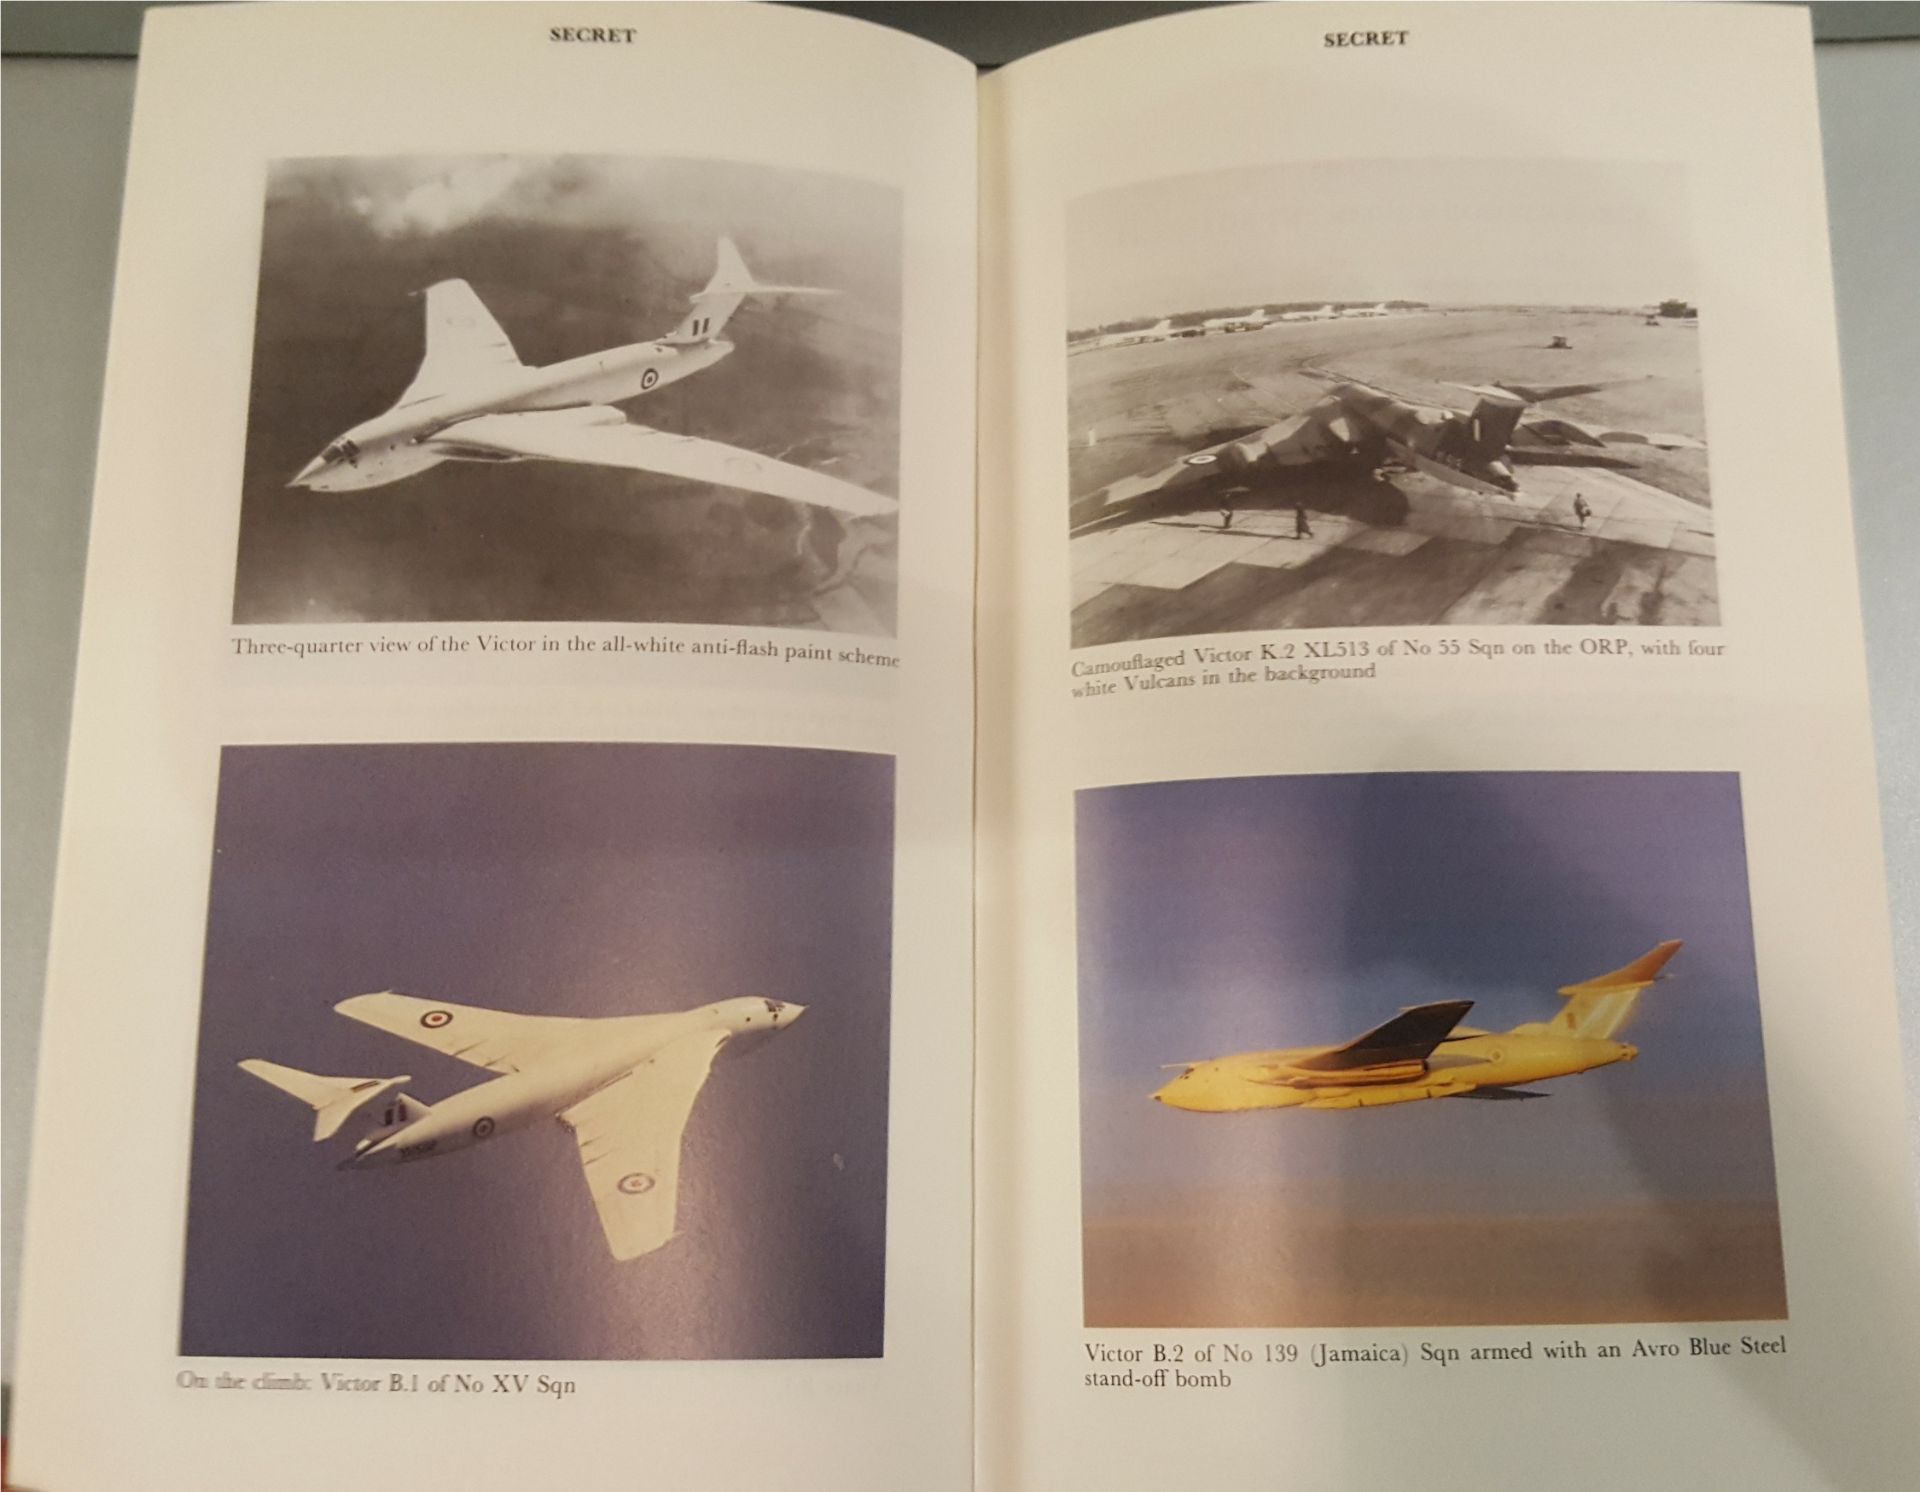 Vintage Militaria 1st Proof Ed Book Was Designated Secret The RAF Strategic Nuclear Deterrent Forces - Image 6 of 13